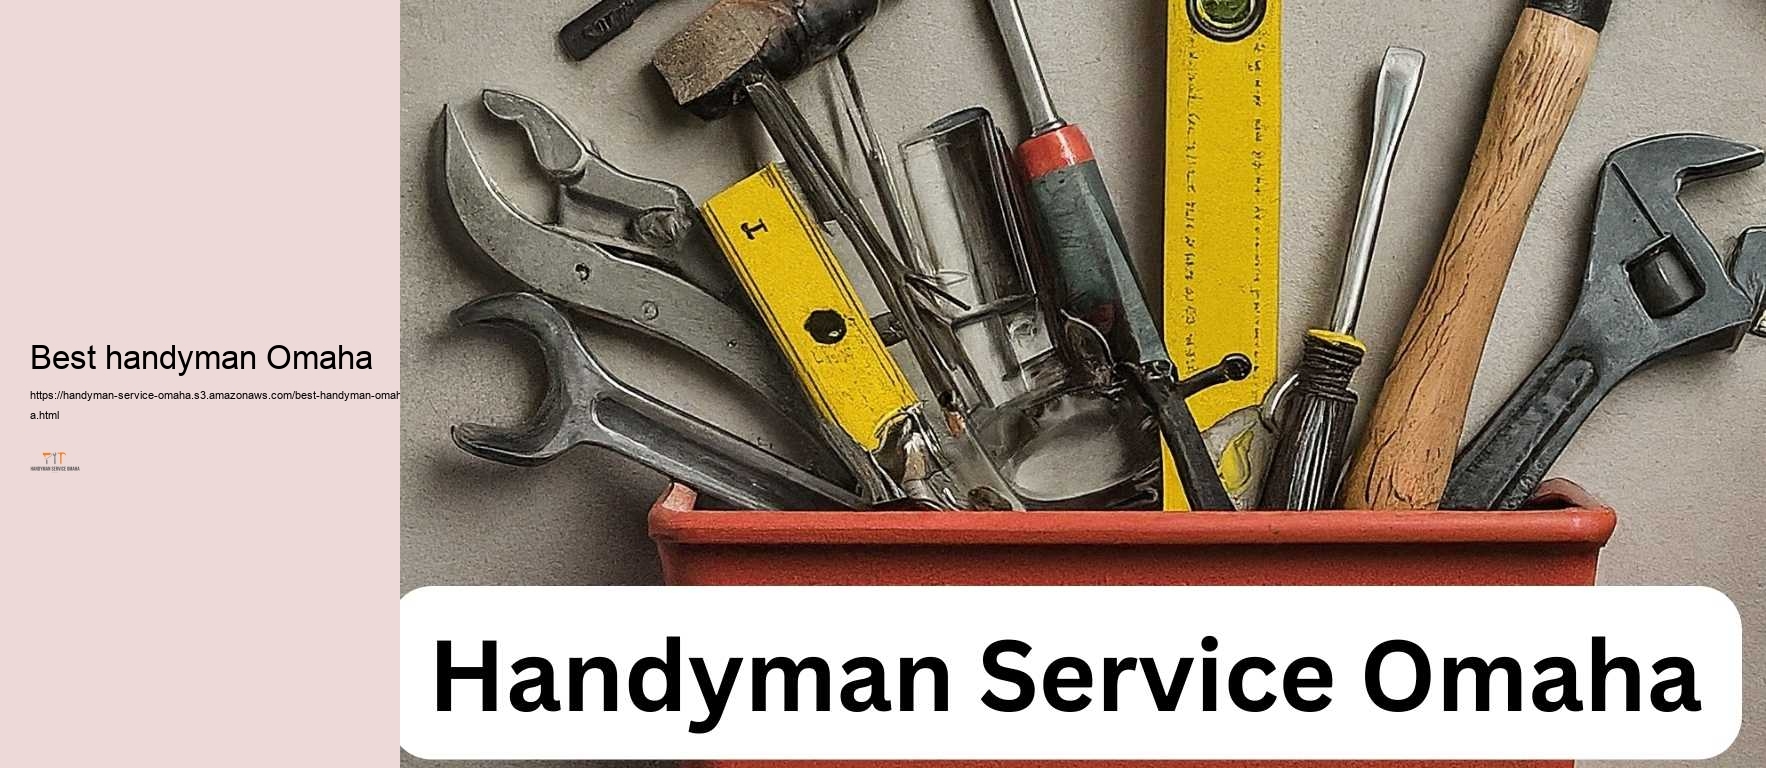 Best handyman Omaha